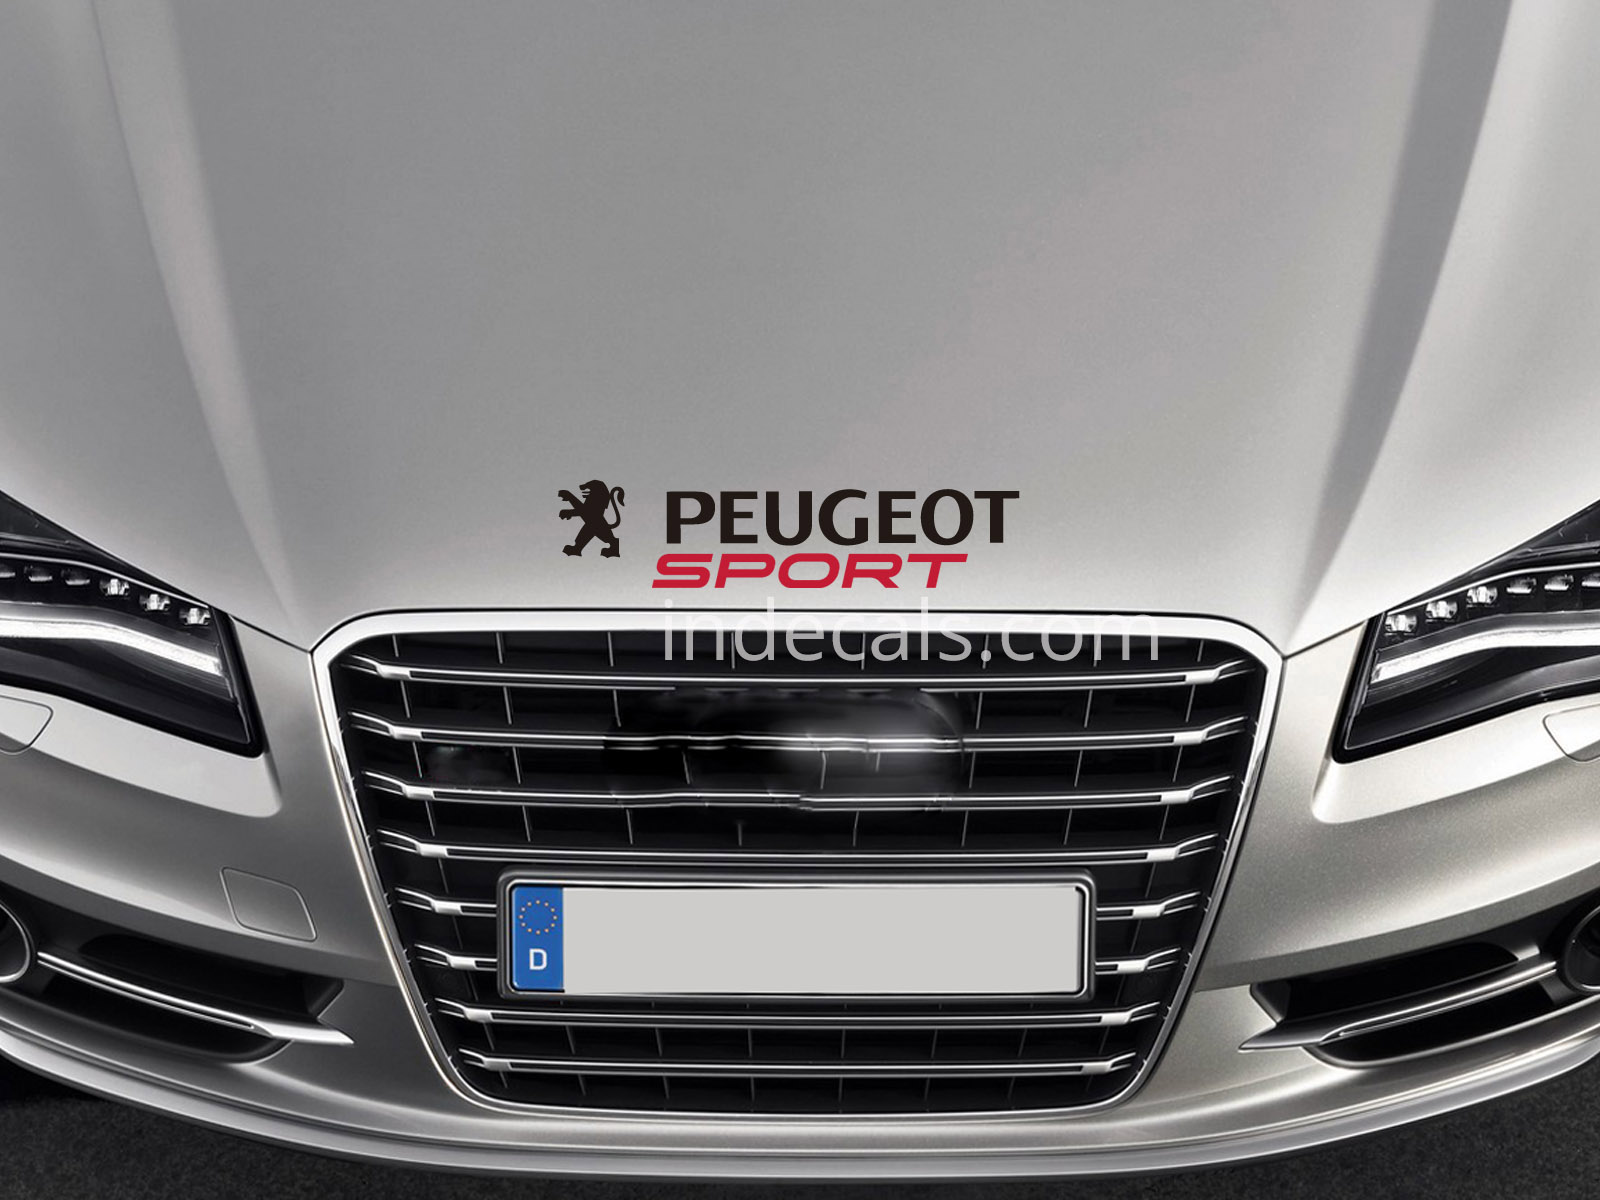 1 x Peugeot Sport Sticker for Bonnet - Black & Red